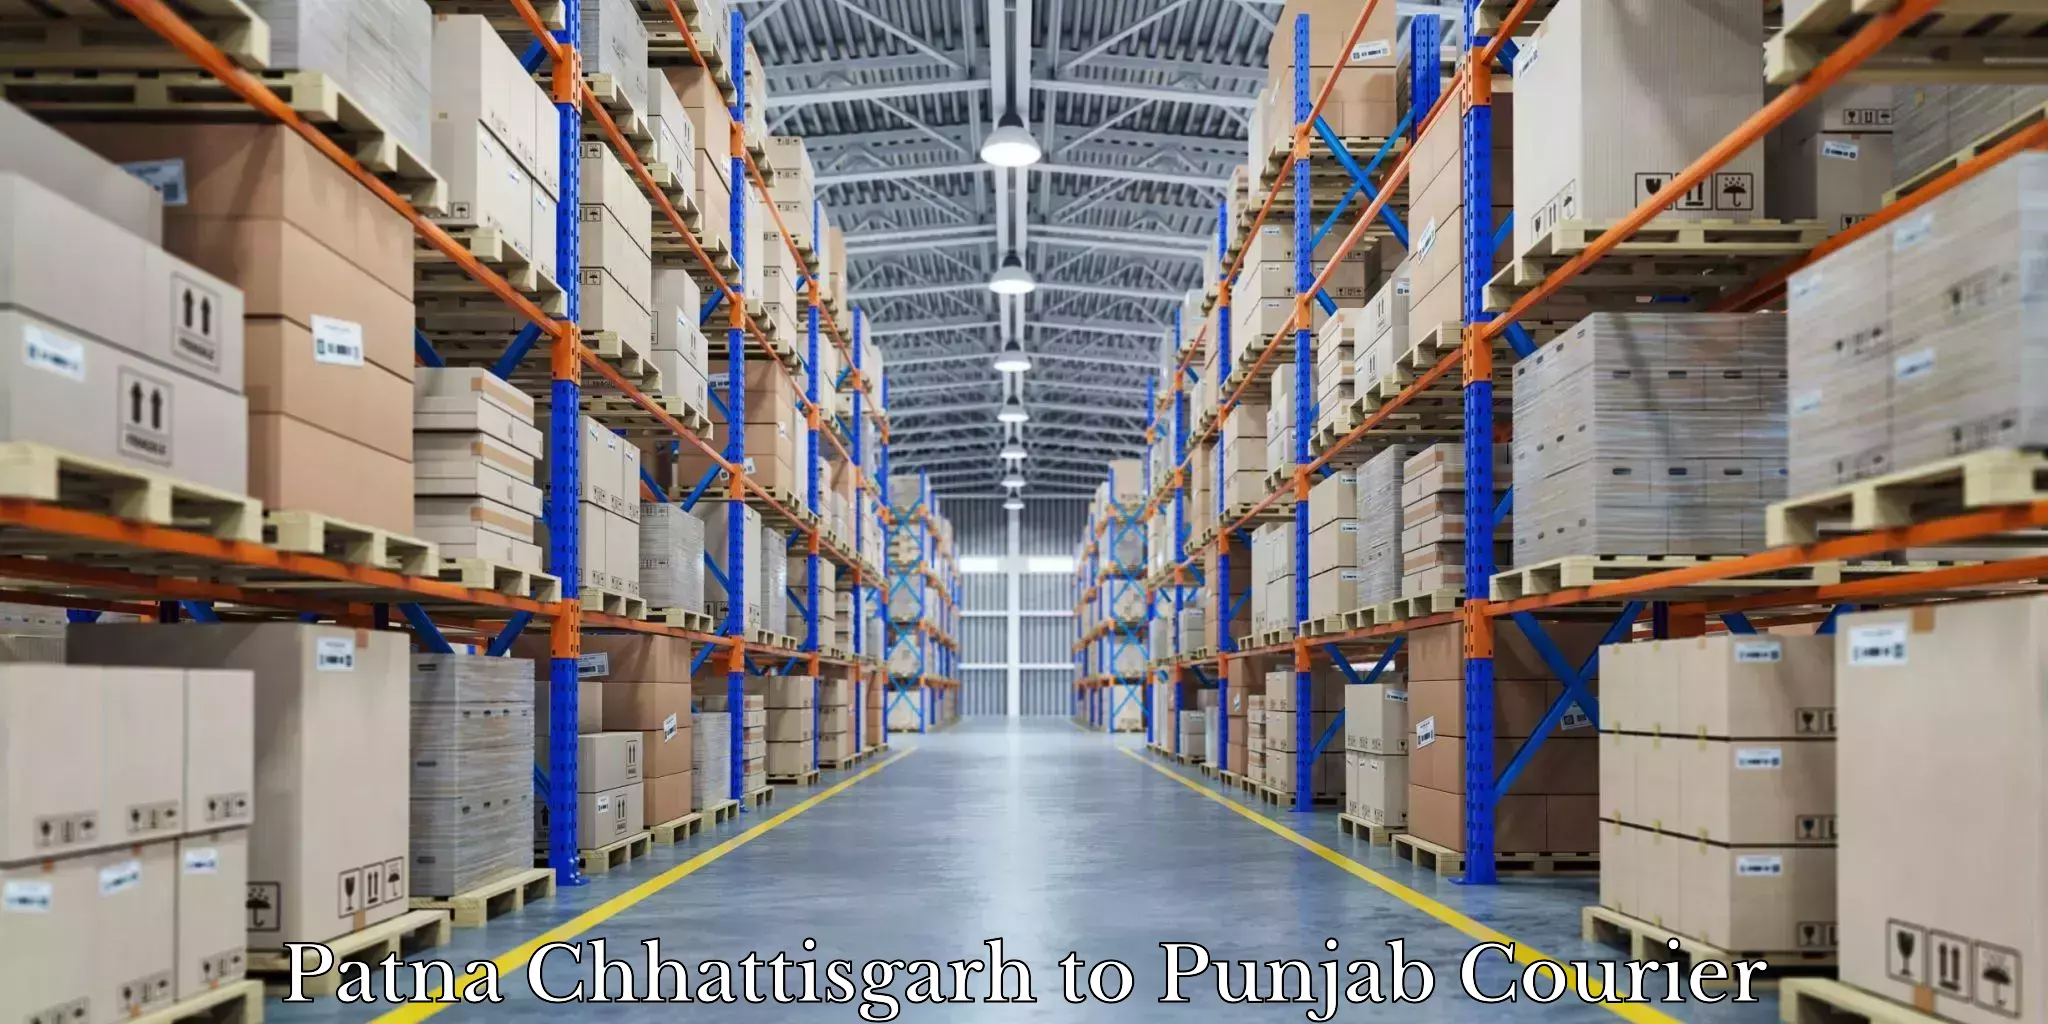 Efficient moving company in Patna Chhattisgarh to Punjab